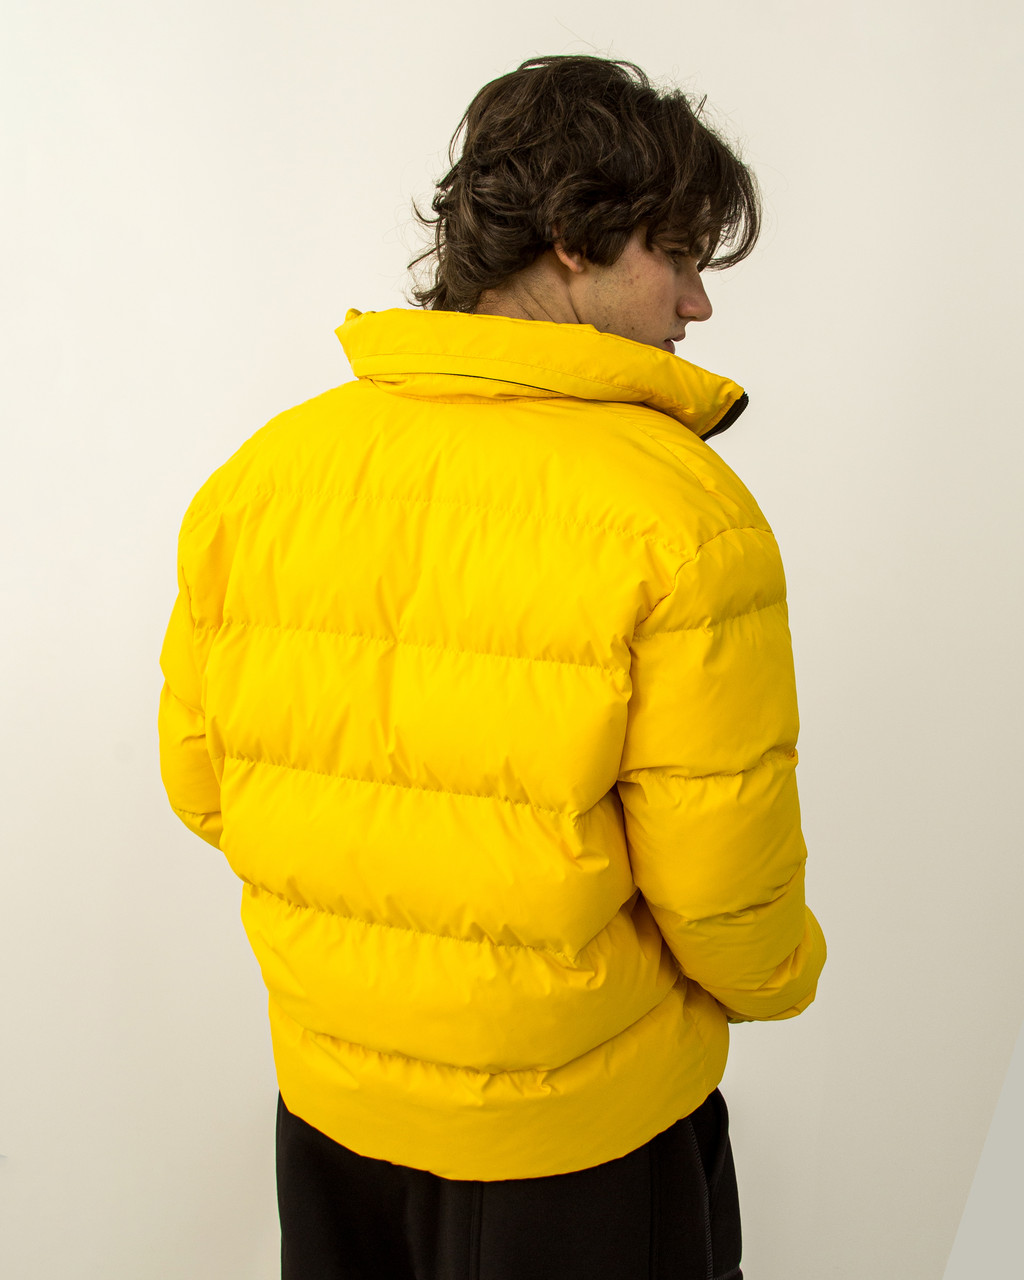 Коротка весняна куртка-пуховик Holla жовта Пушка Огонь - Фото 3